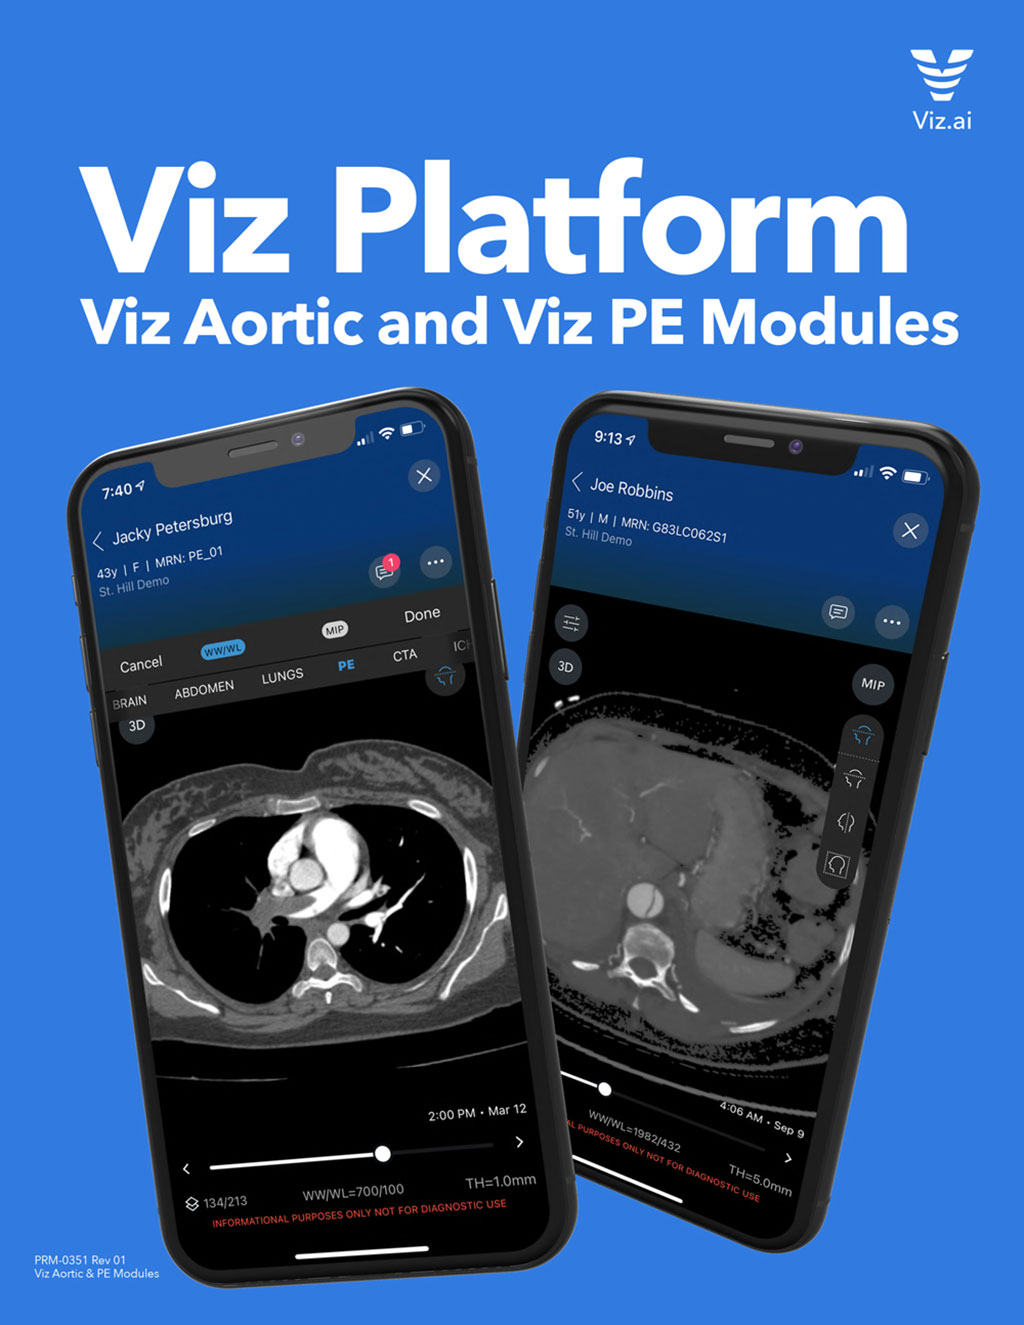 Image: Viz Aortic and Viz PE modules (Photo courtesy of Viz.ai, Inc.)